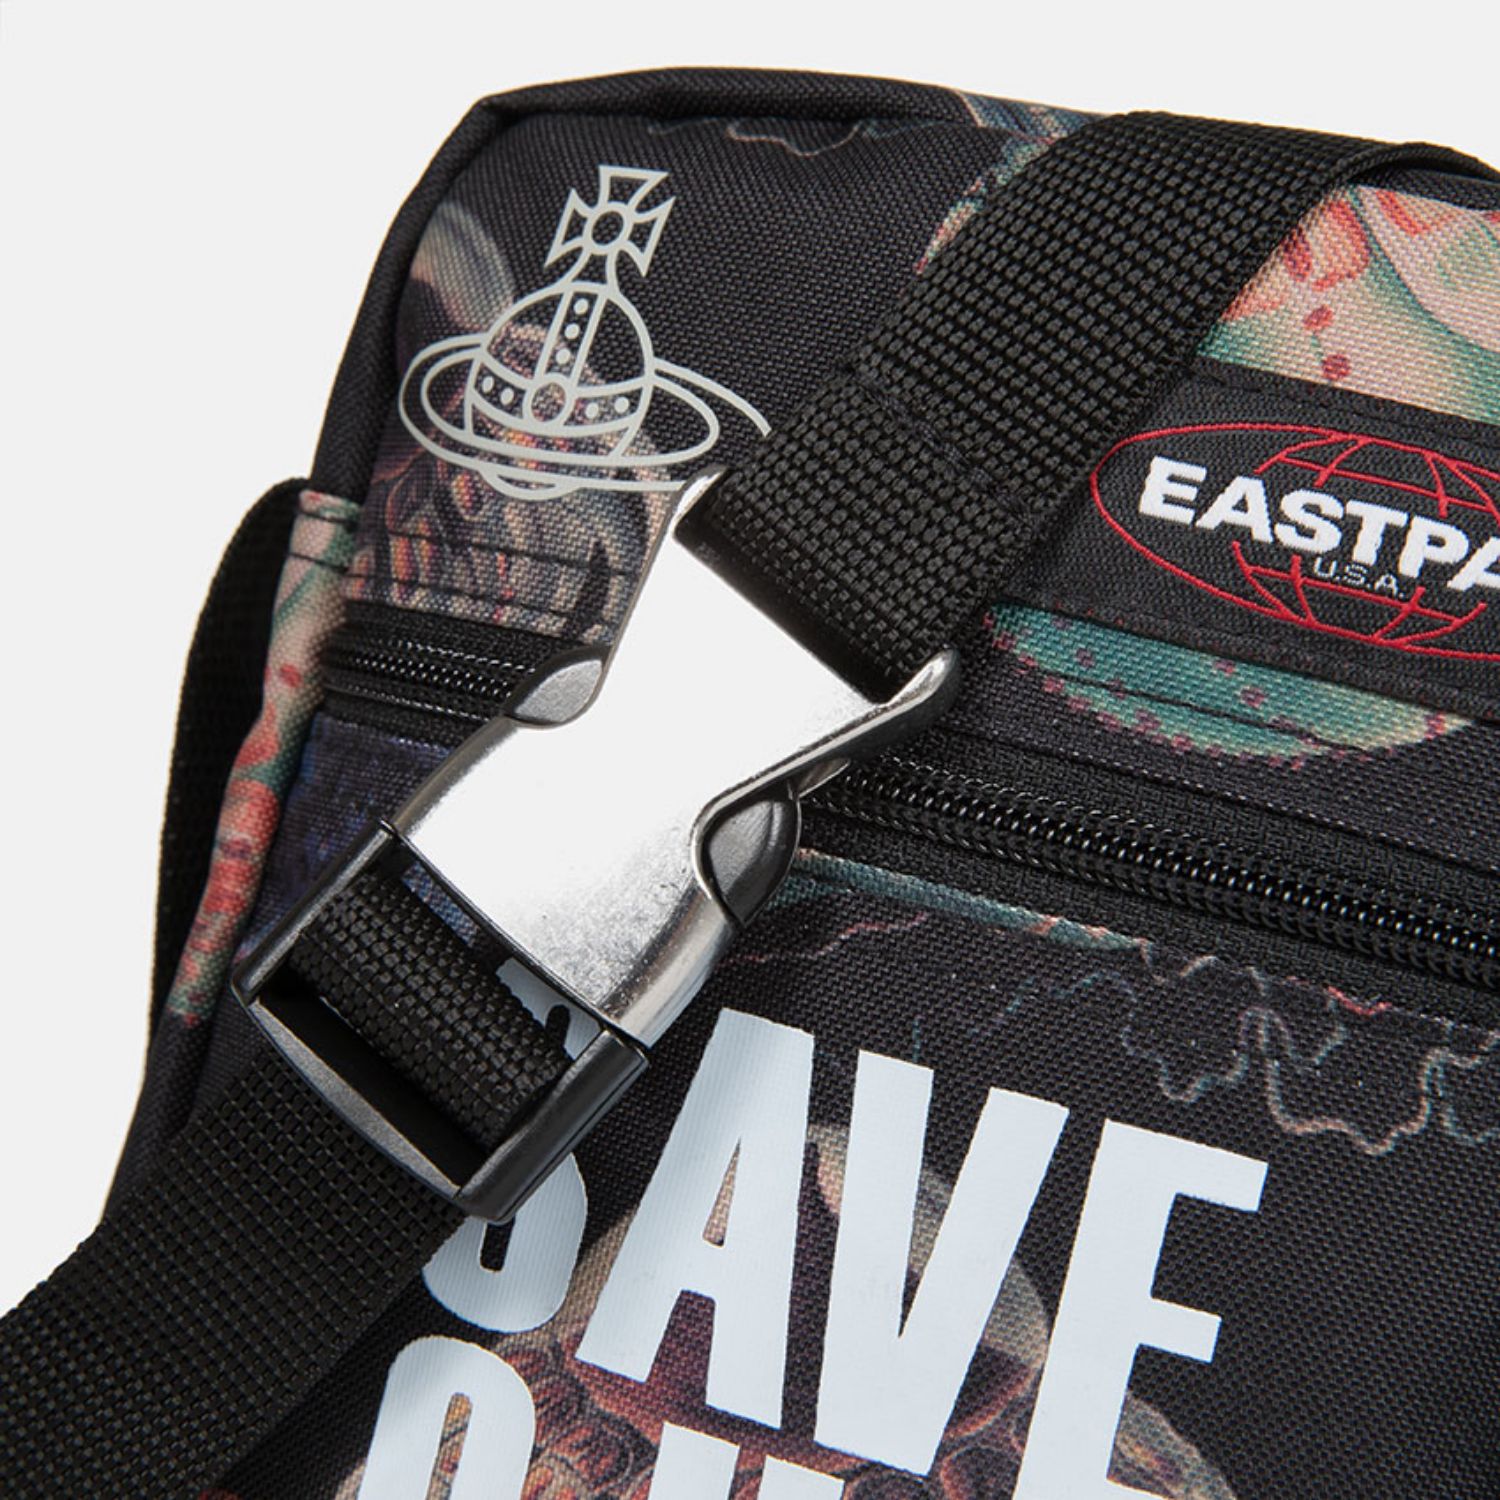 Vivienne Westwood Joins Eastpak for an Intergalactic Bag Collab